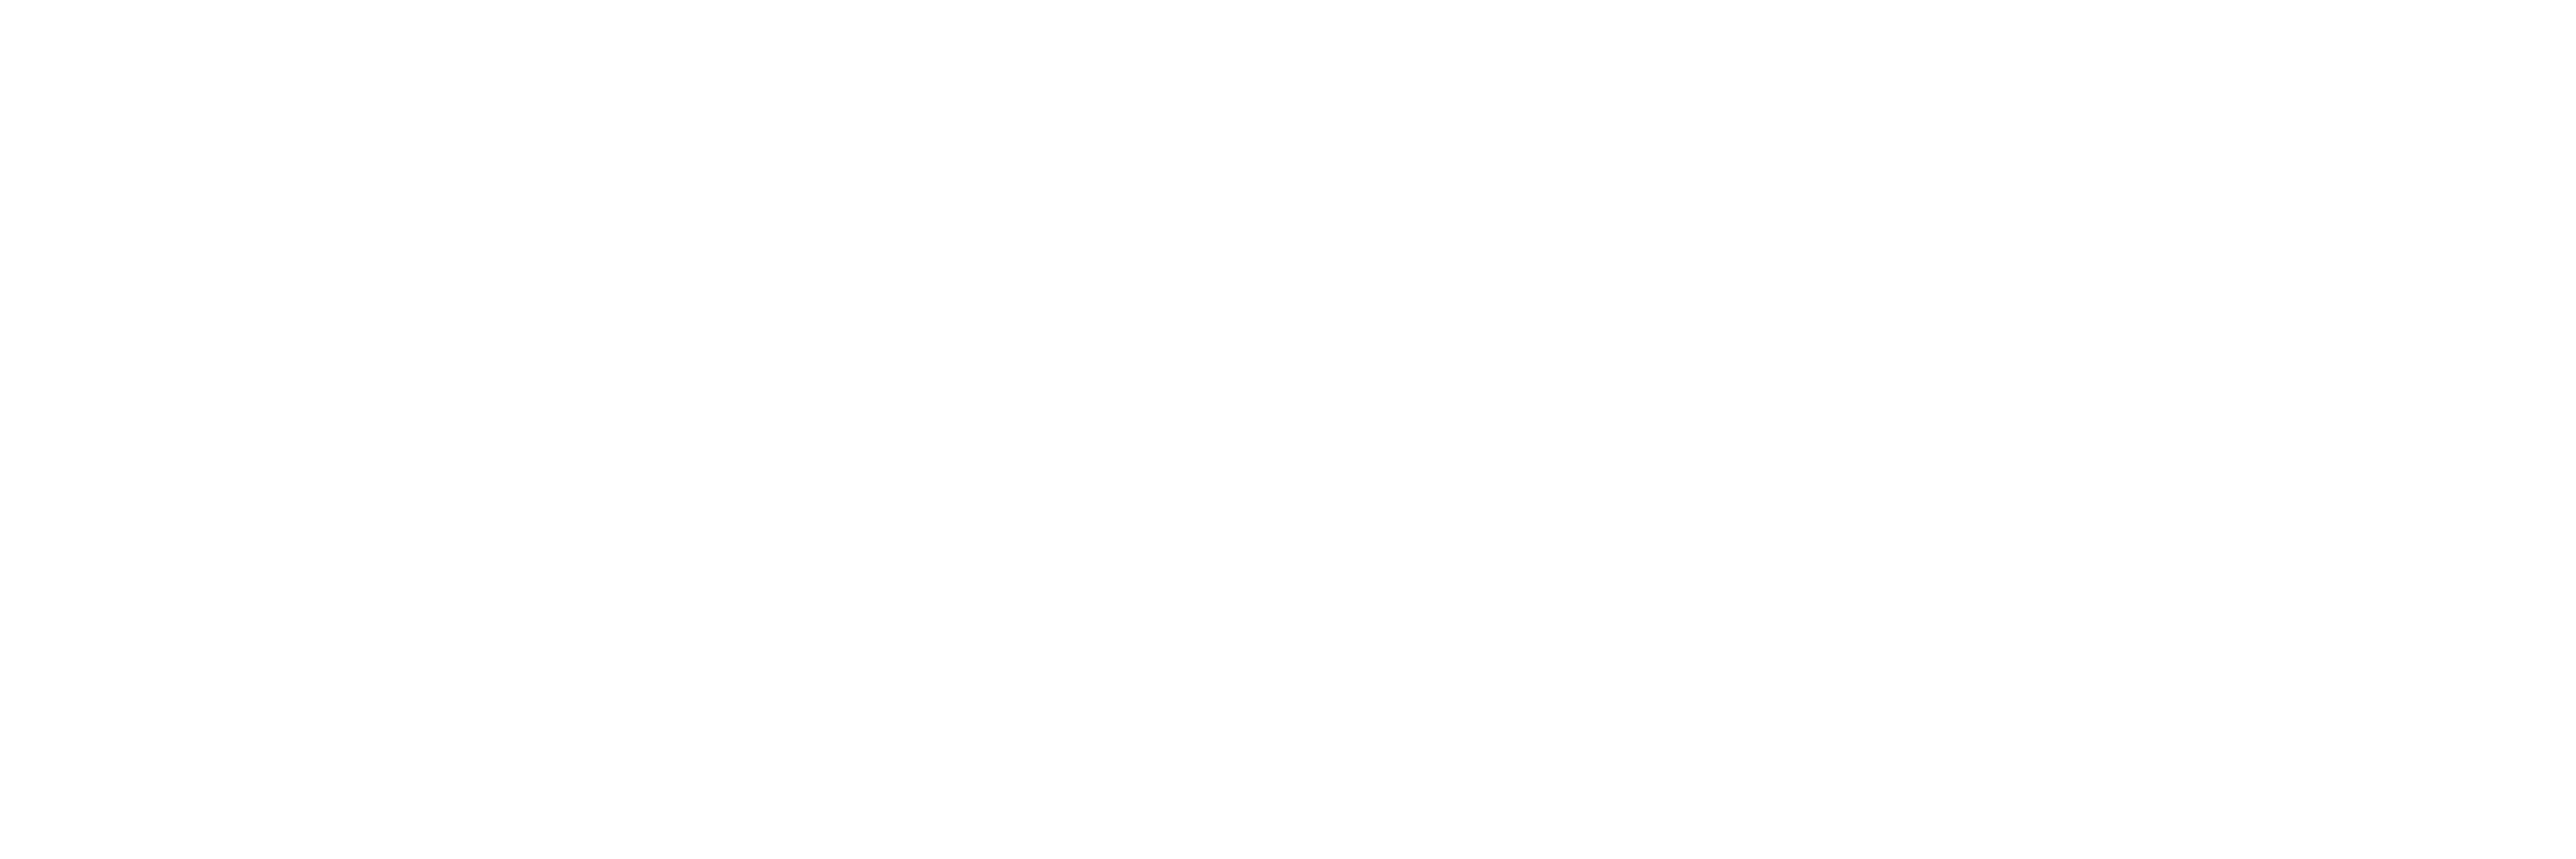 Bold Journey Logo